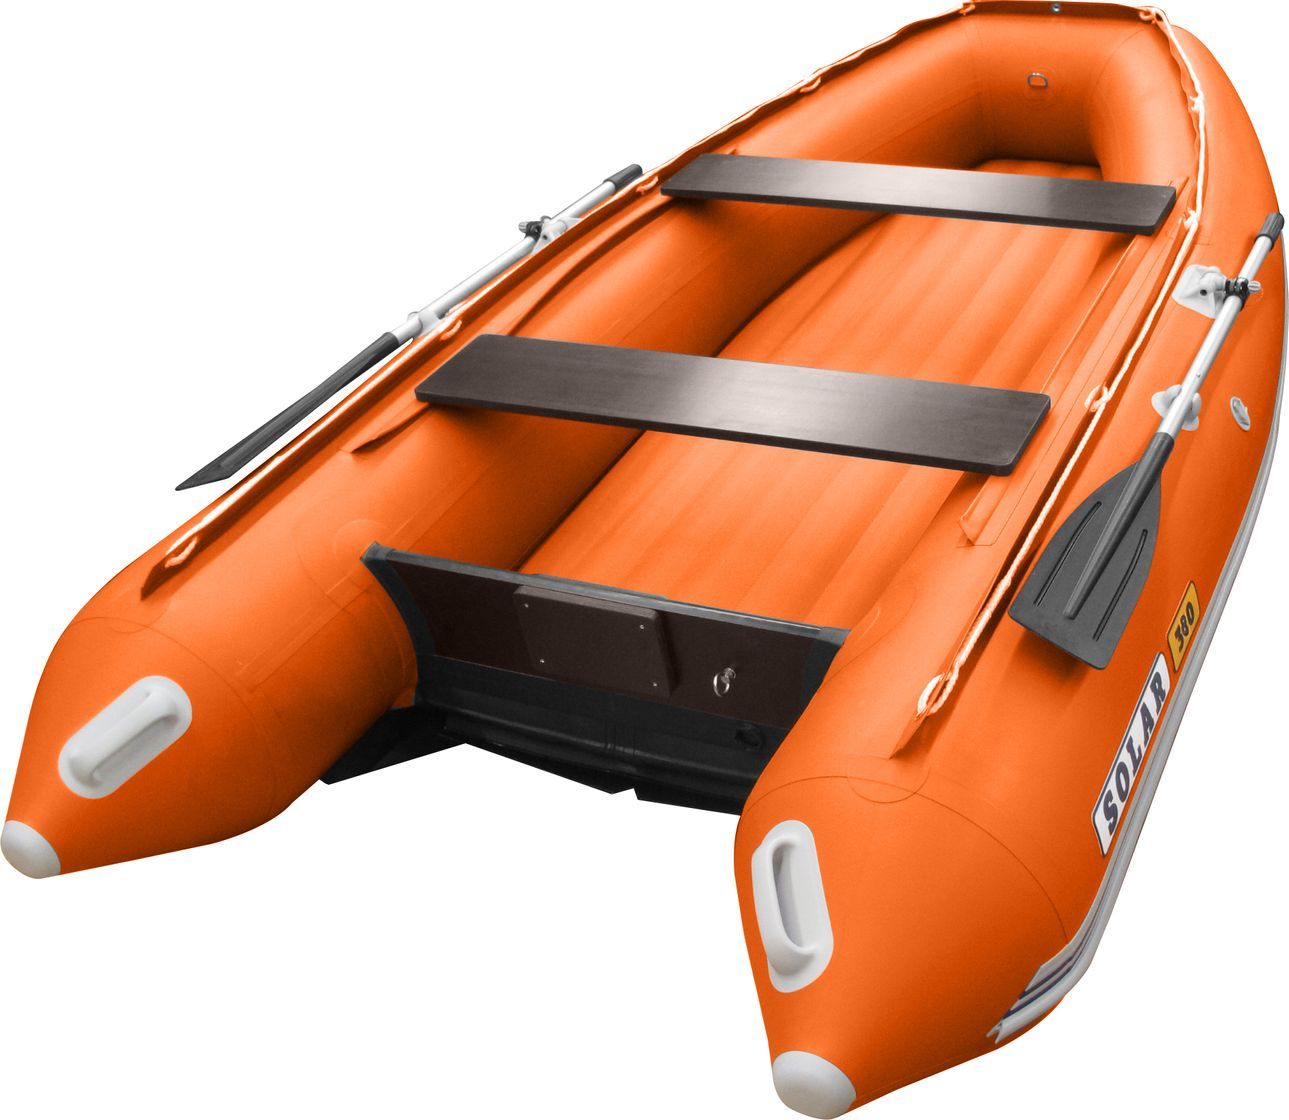 Надувная лодка ПВХ SOLAR-350 К (Максима), оранжевый SLR350k_max_orange надувная лодка пвх solar 350 к максима оранжевый slr350k max orange